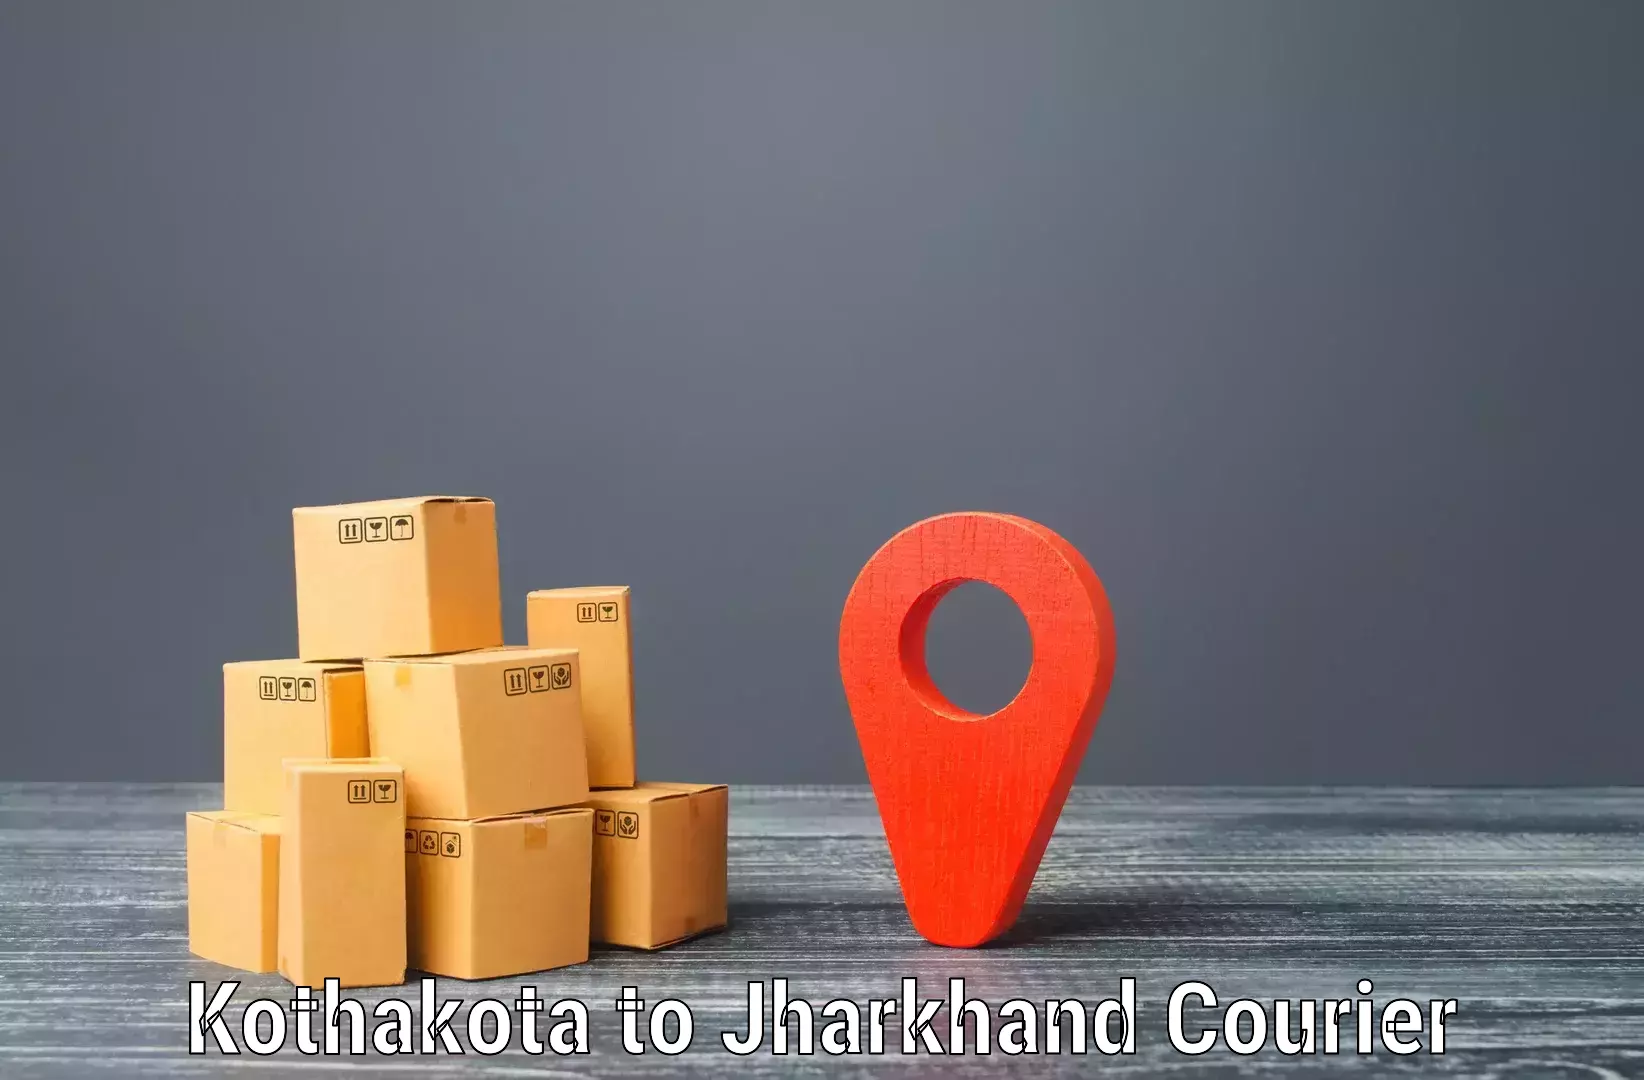 Advanced shipping technology Kothakota to Adityapur